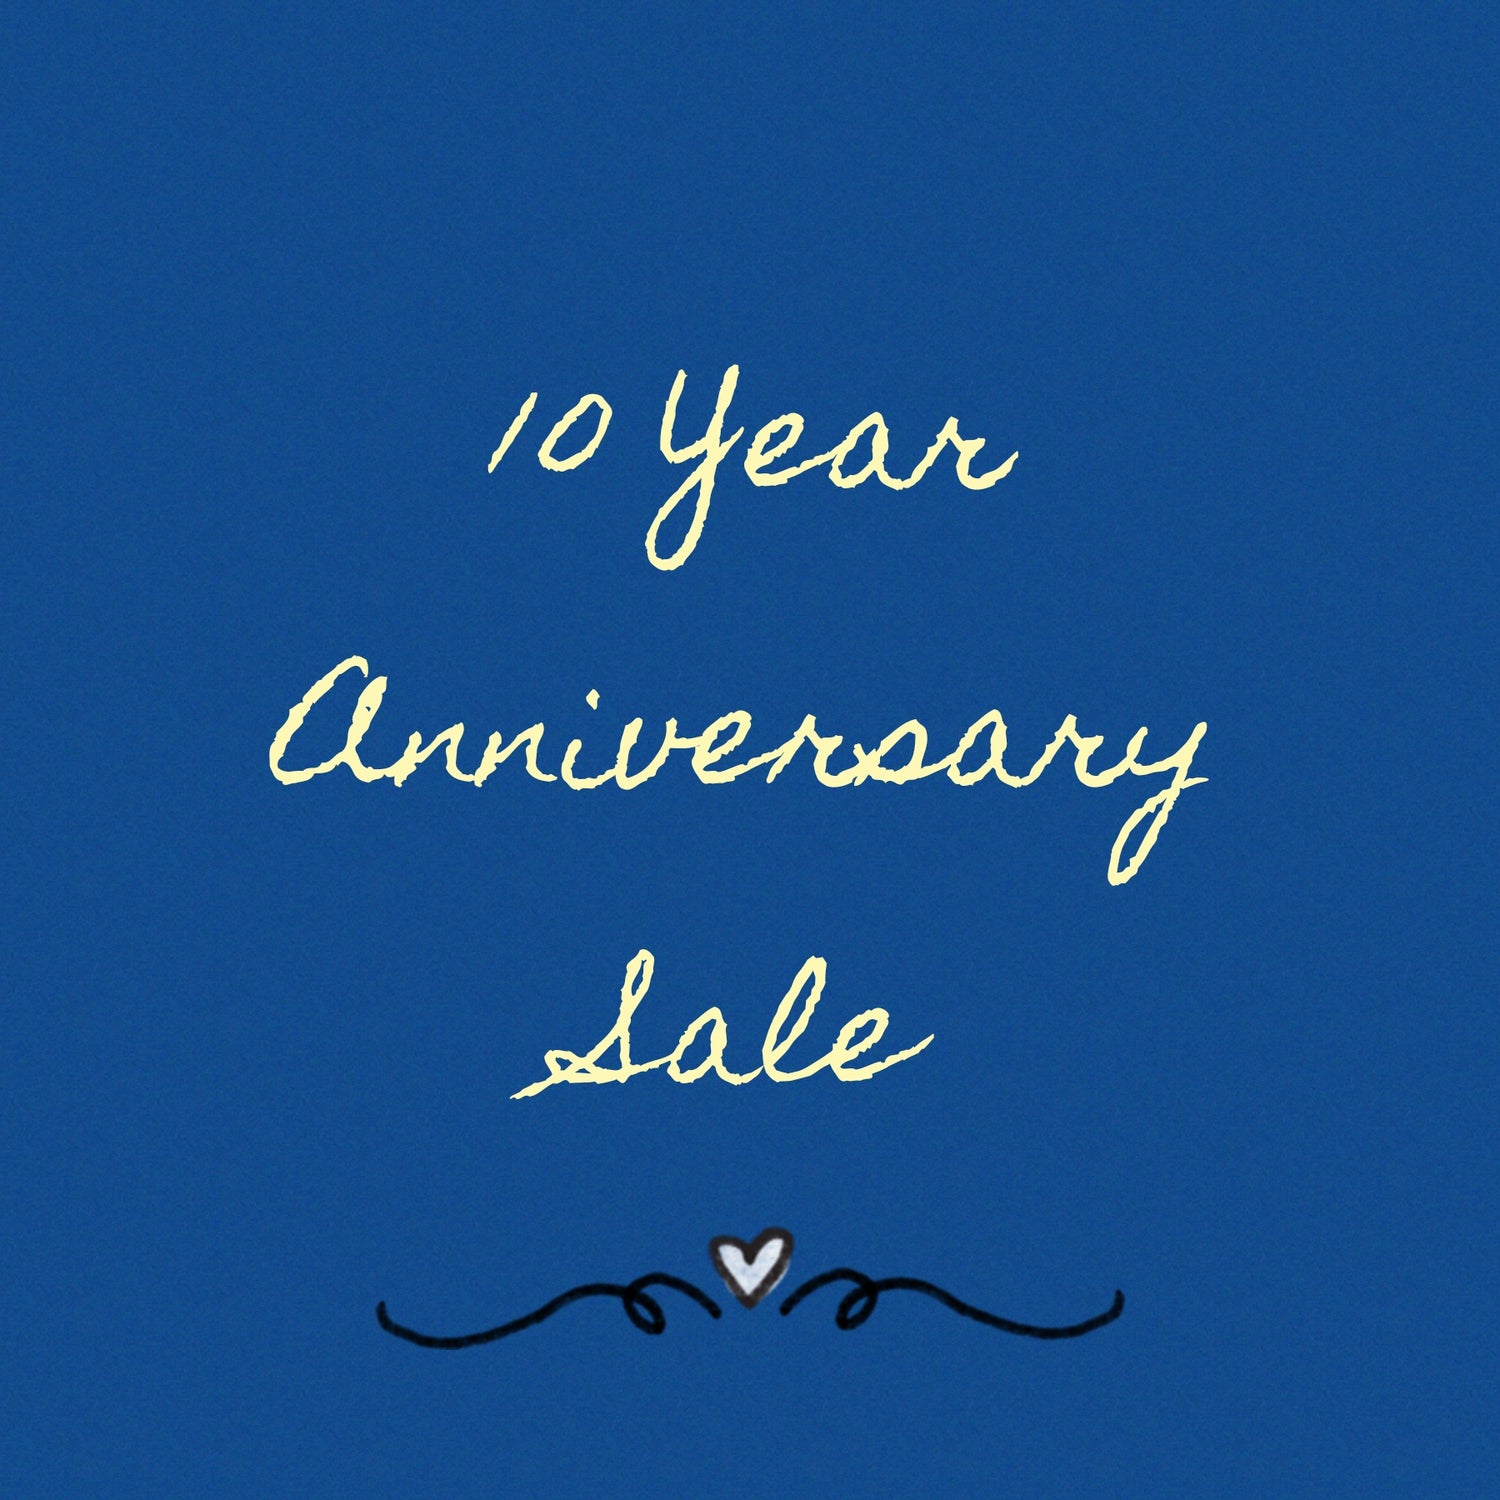 10 Year Anniversary Sale